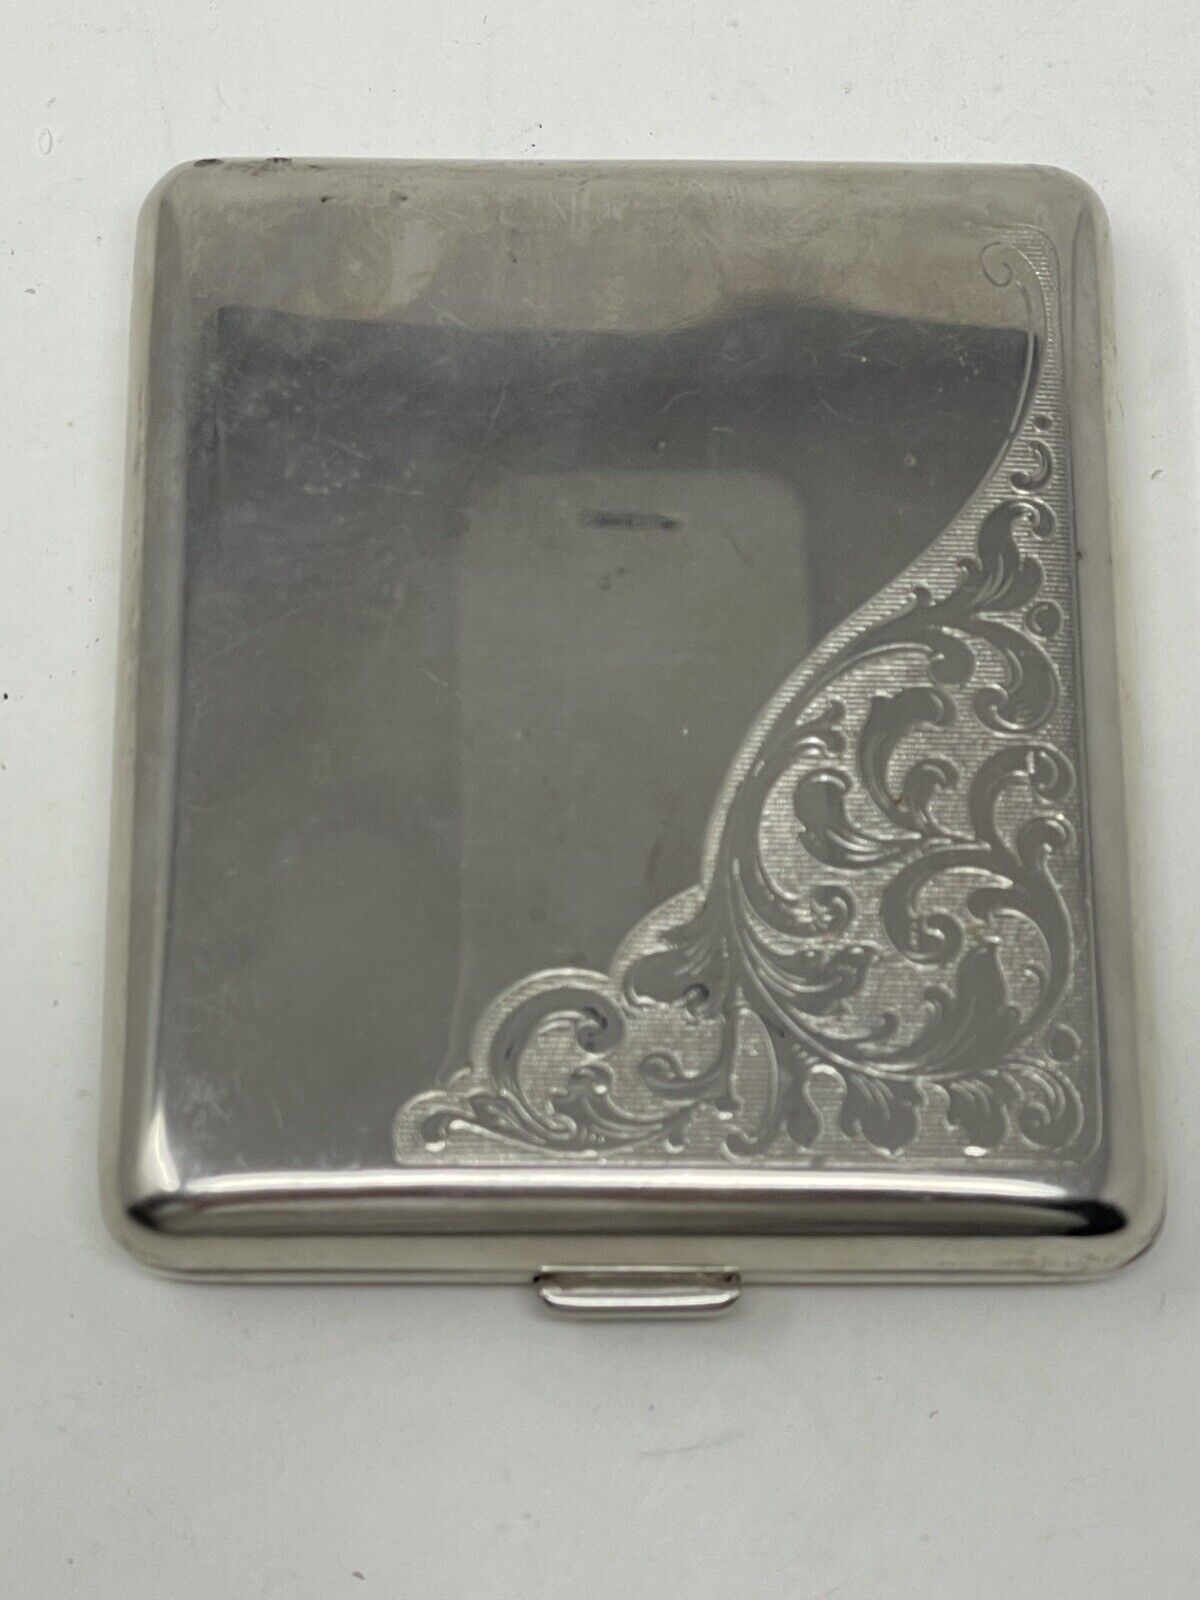 Vintage Ornate Silver Toned (maybe Plate) Art Deco Cigarette Case Holder Germany